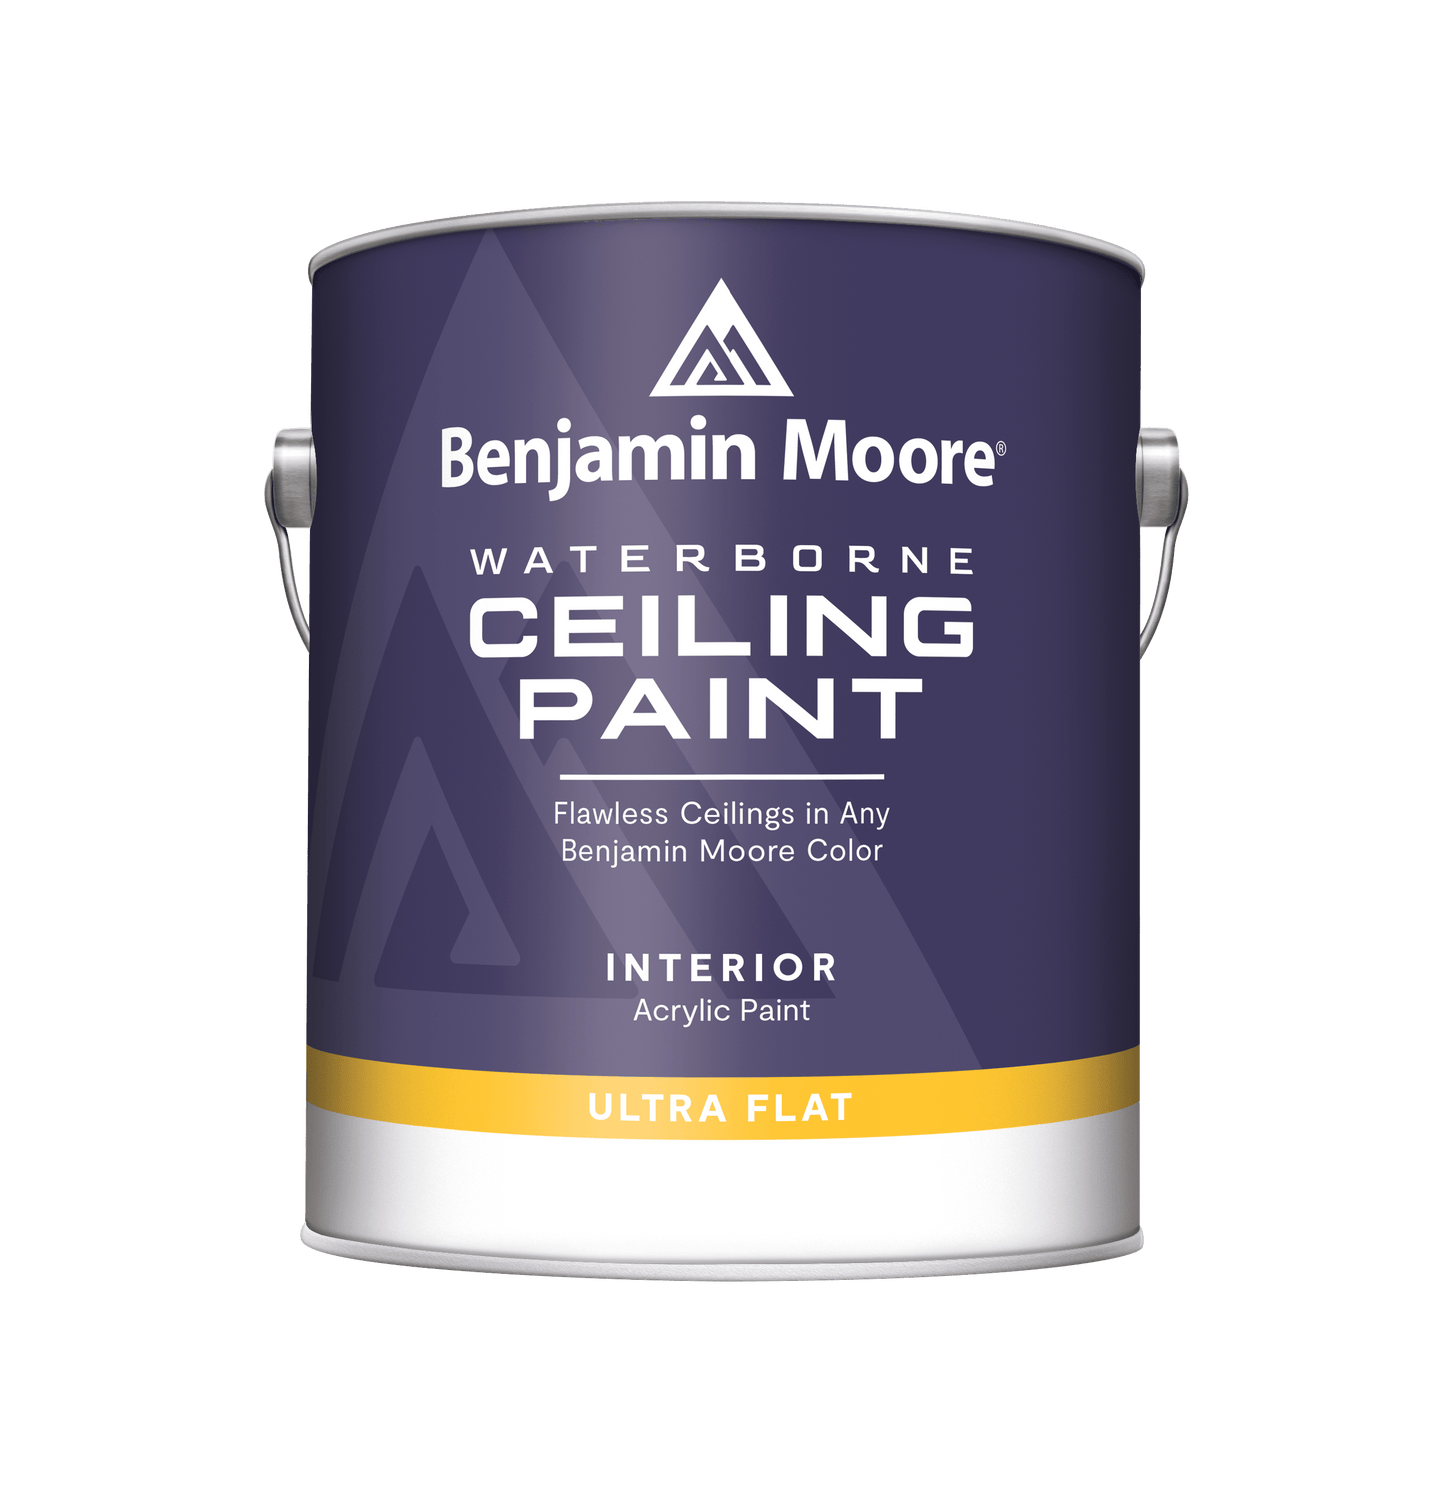 Benjamin Moore Waterborne Ceiling Paint - Rossi Paint Stores - Ultra Flat - Gallon